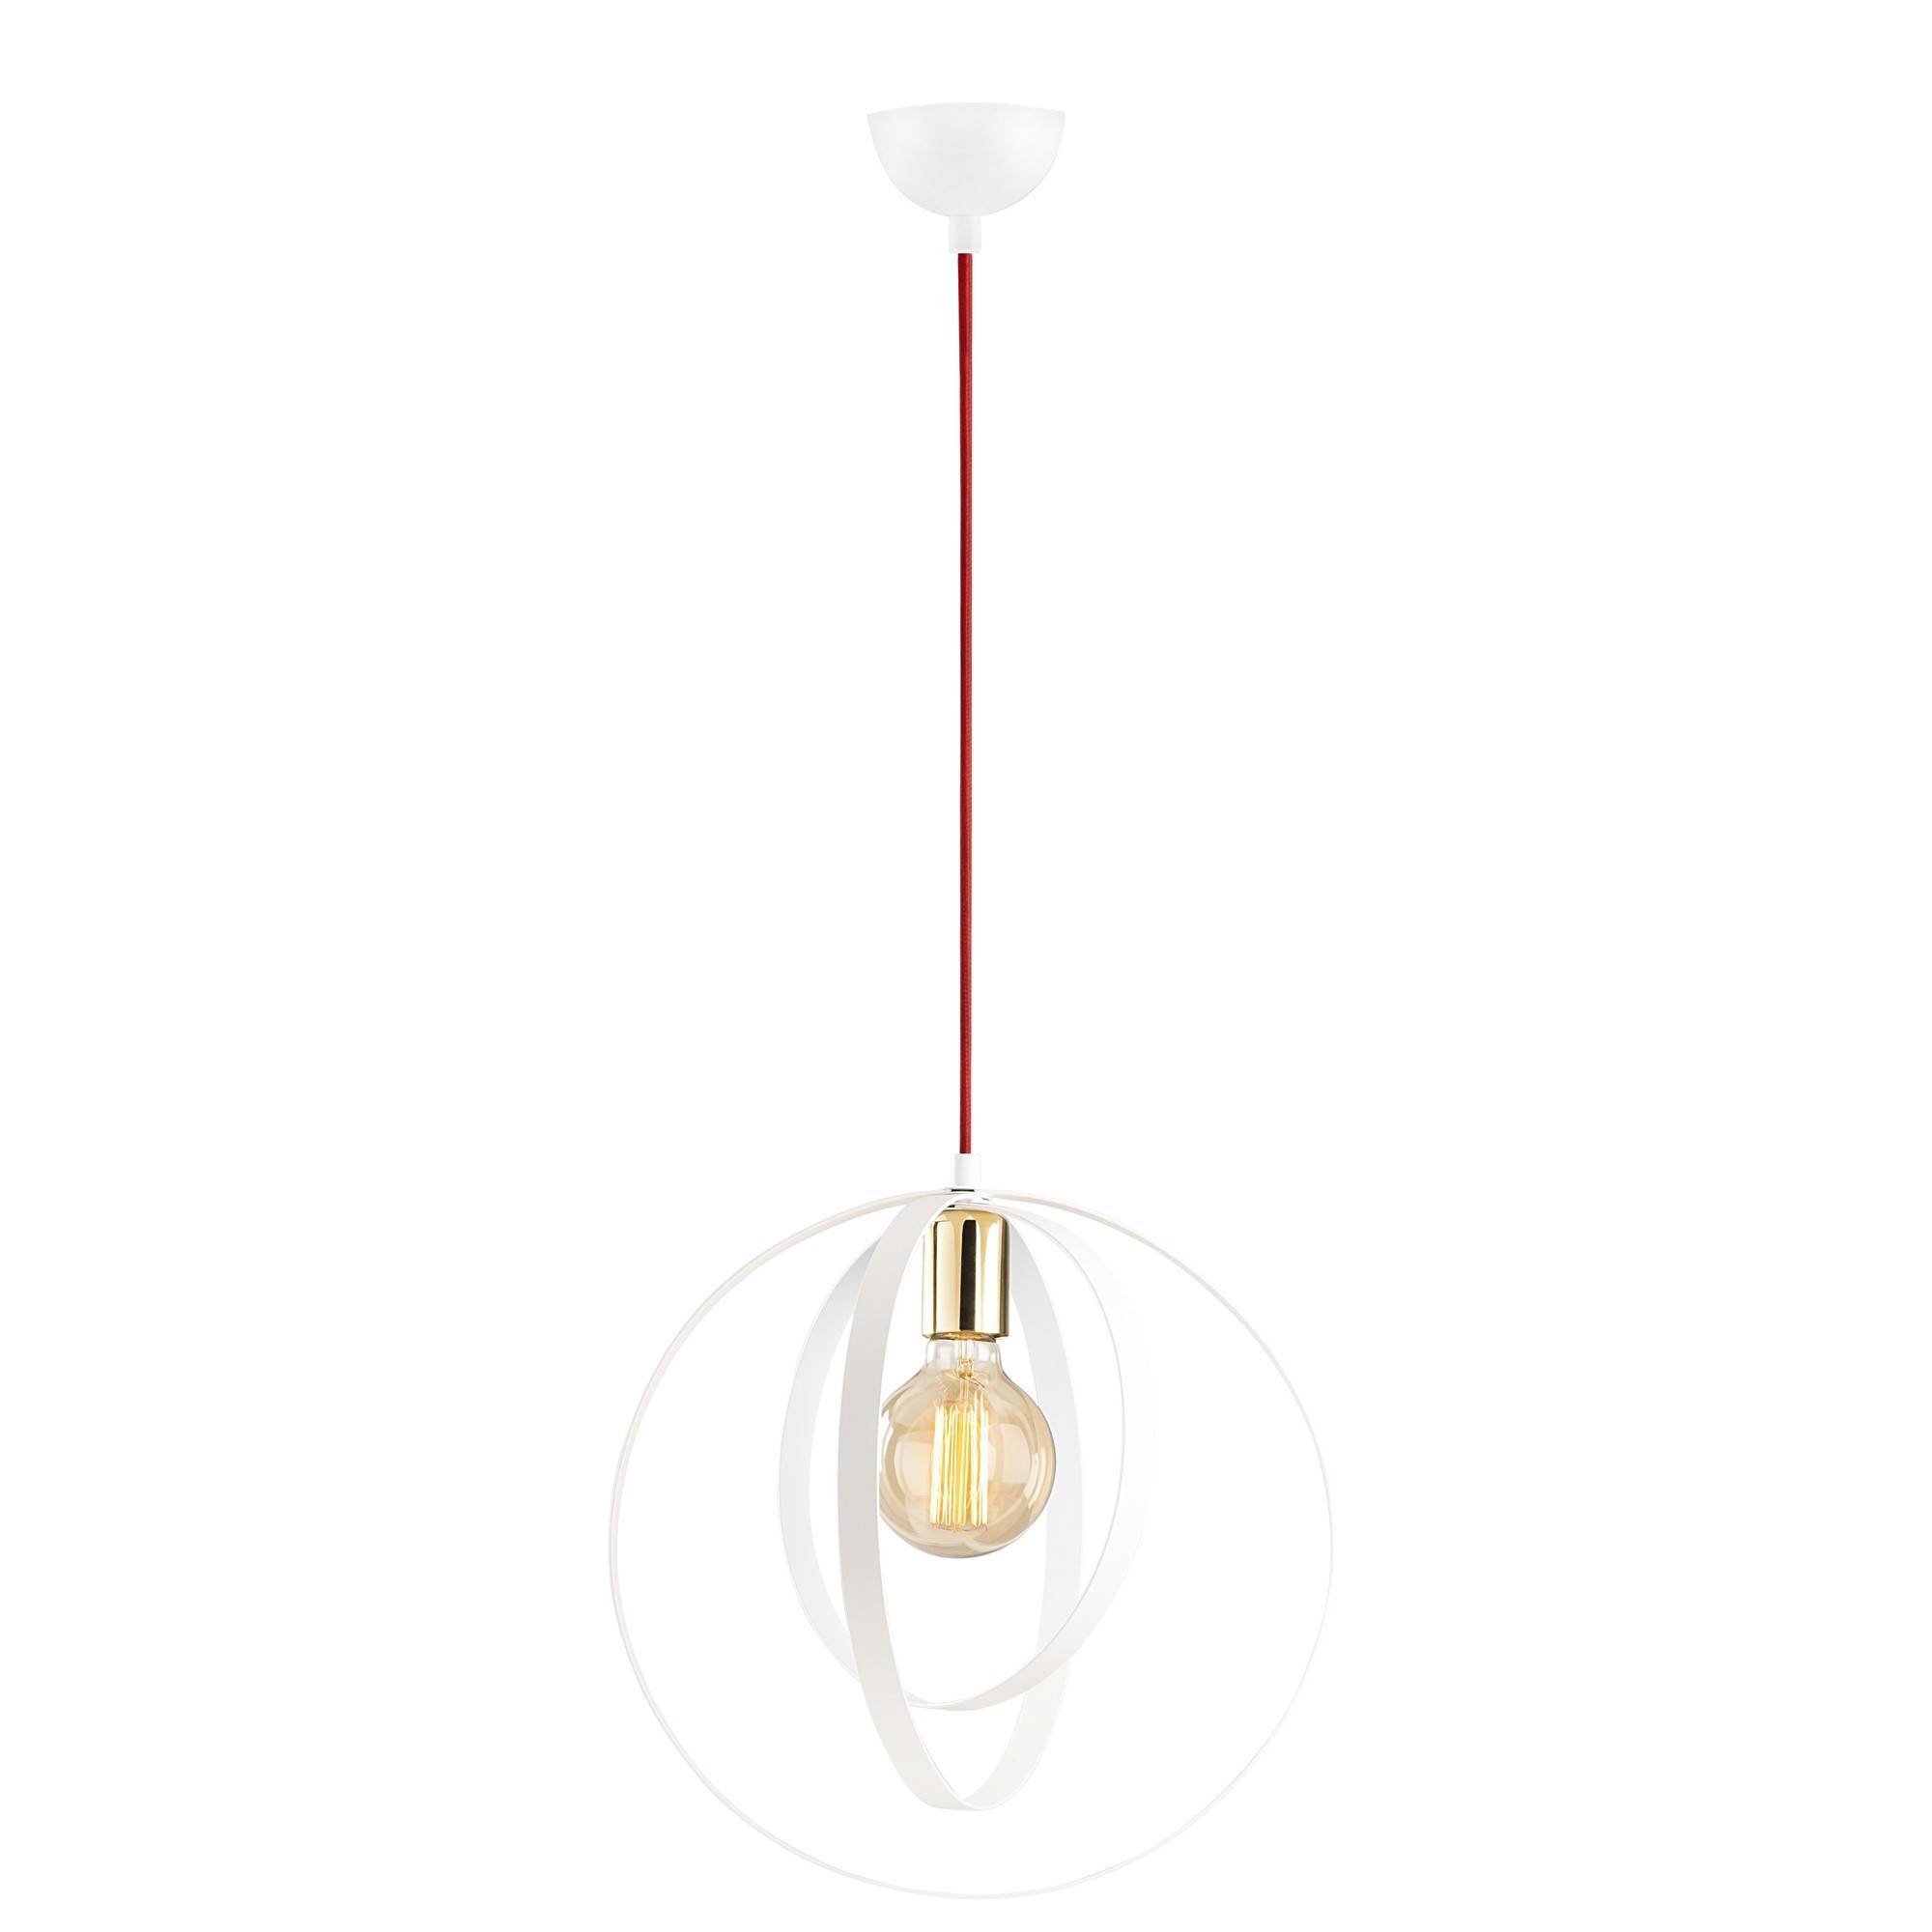 Annulis 3-Ring Hanglamp Wit Metaal